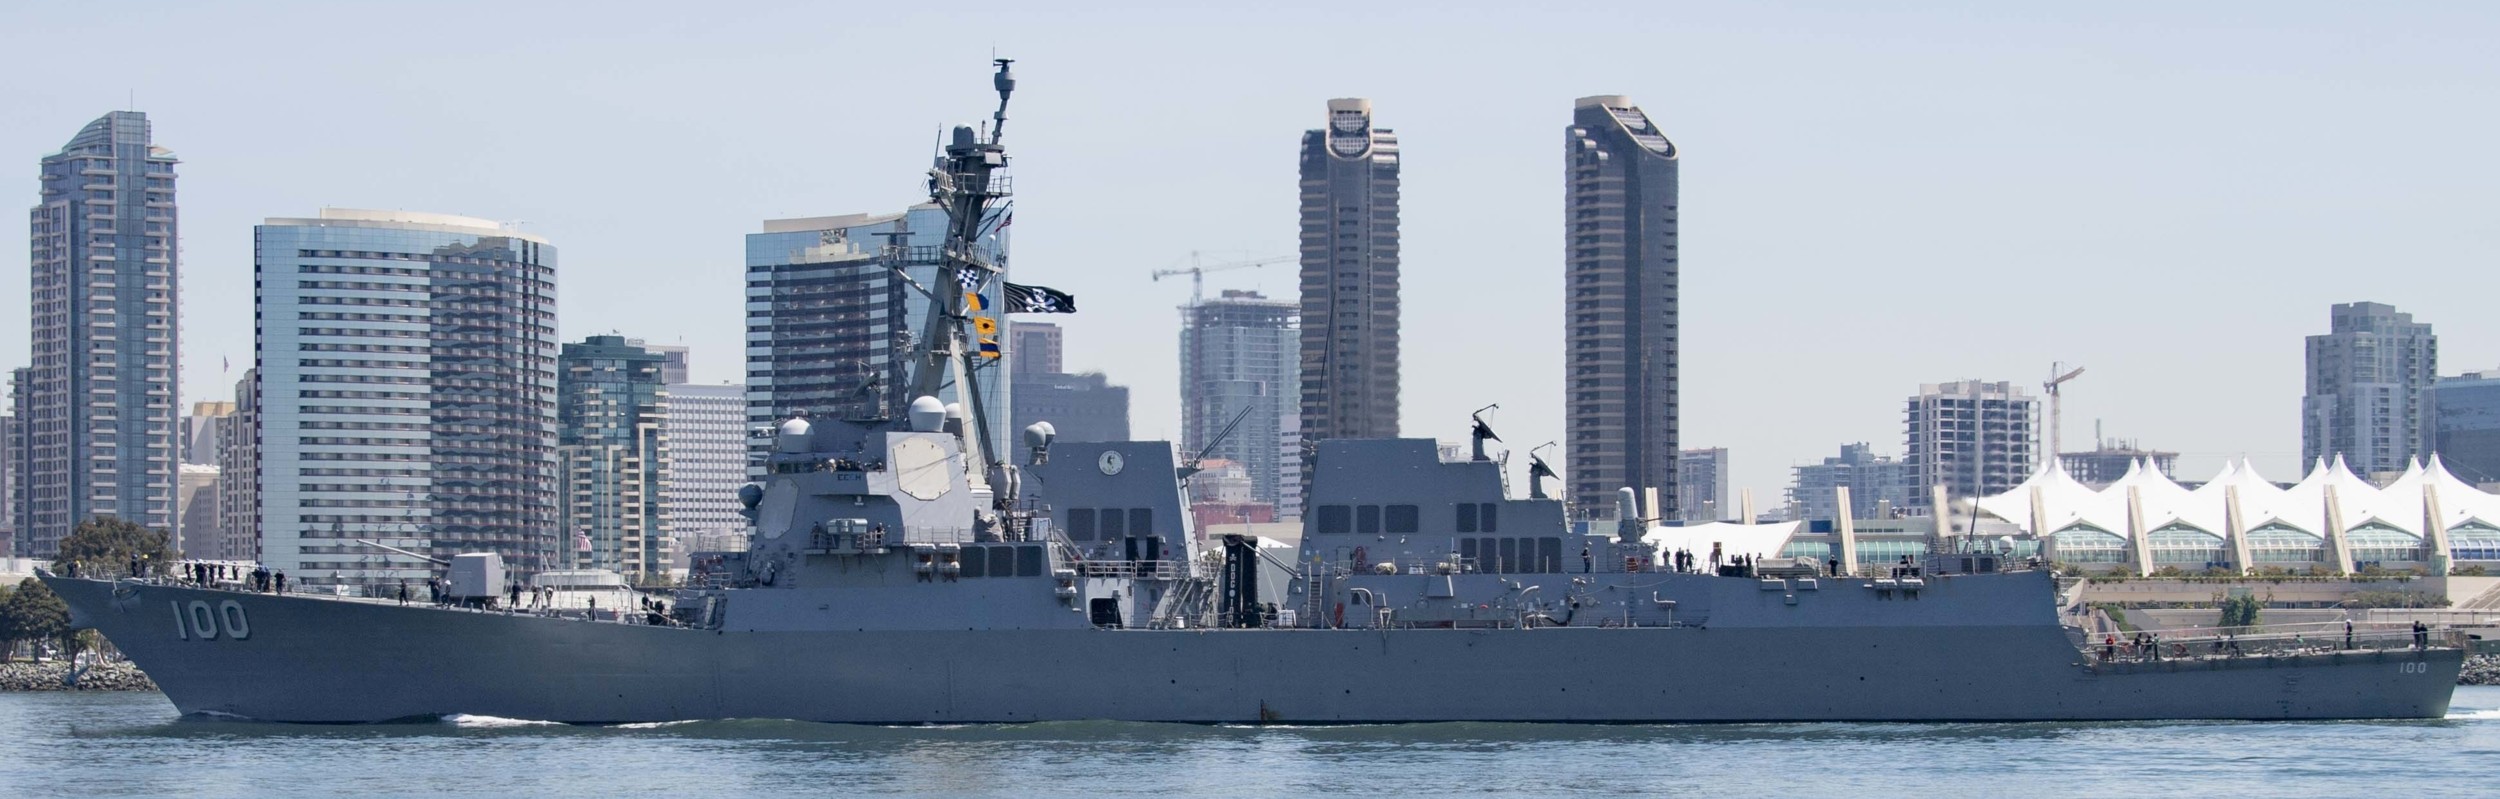 ddg-100 uss kidd arleigh burke class guided missile destroyer aegis us navy 55